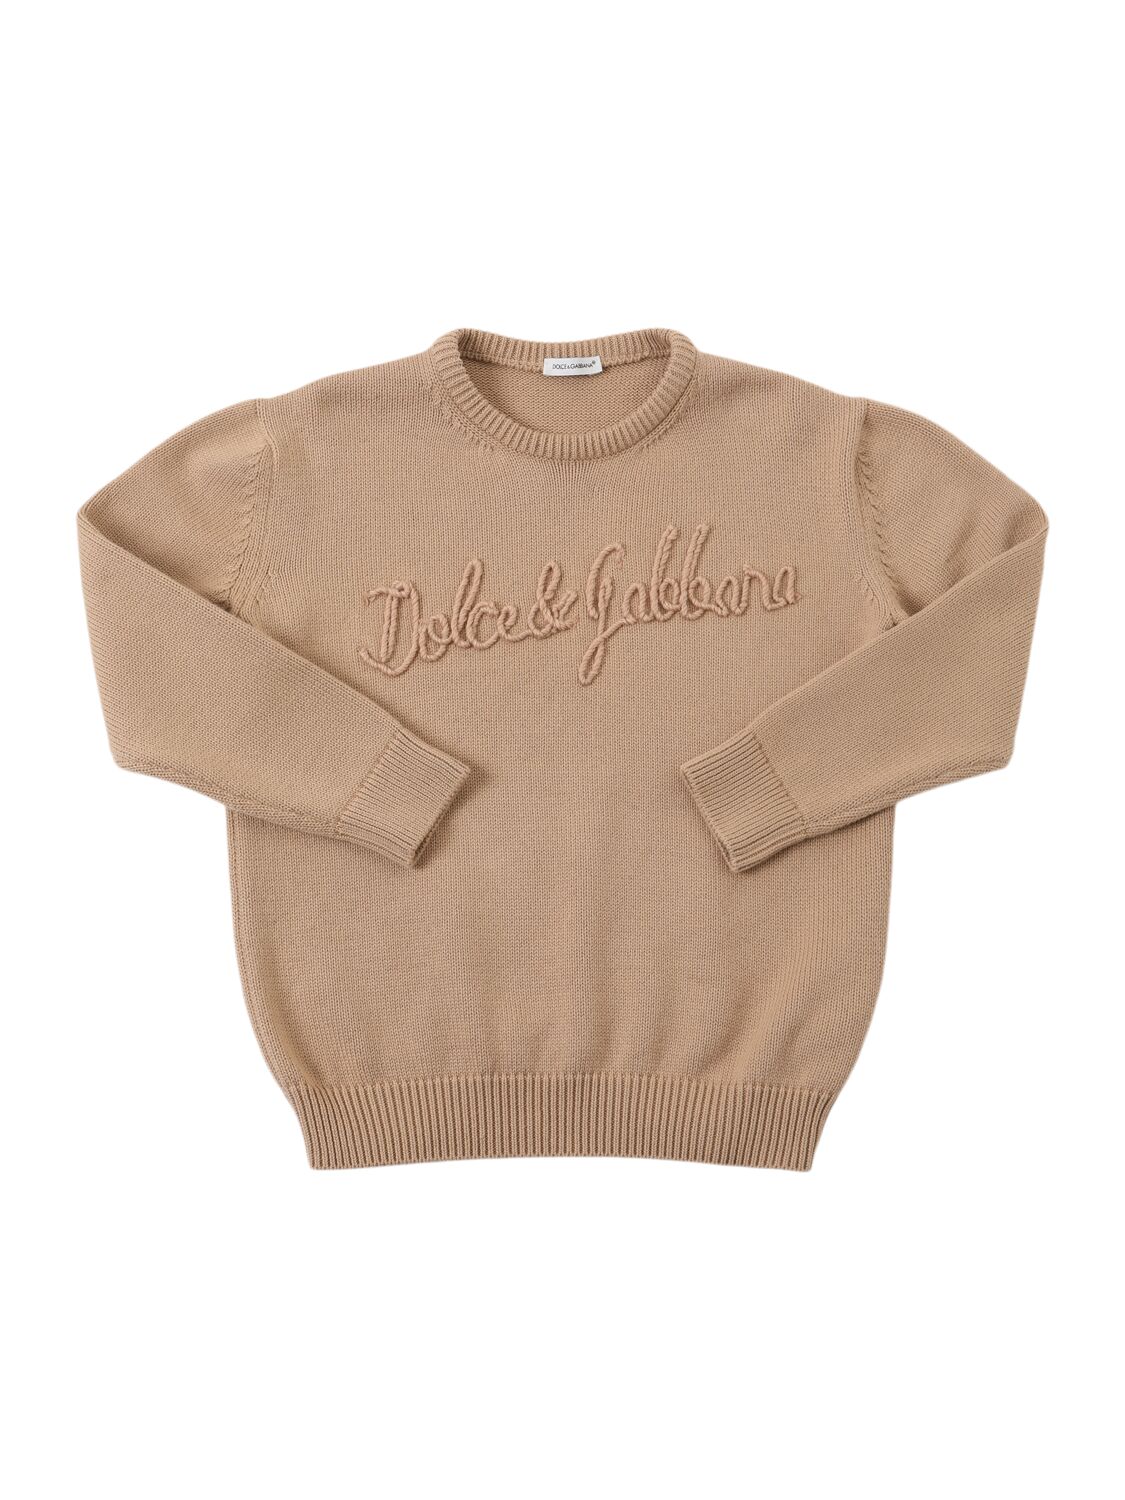 Dolce & Gabbana Embroidered Logo Cotton Knit Sweater In Beige